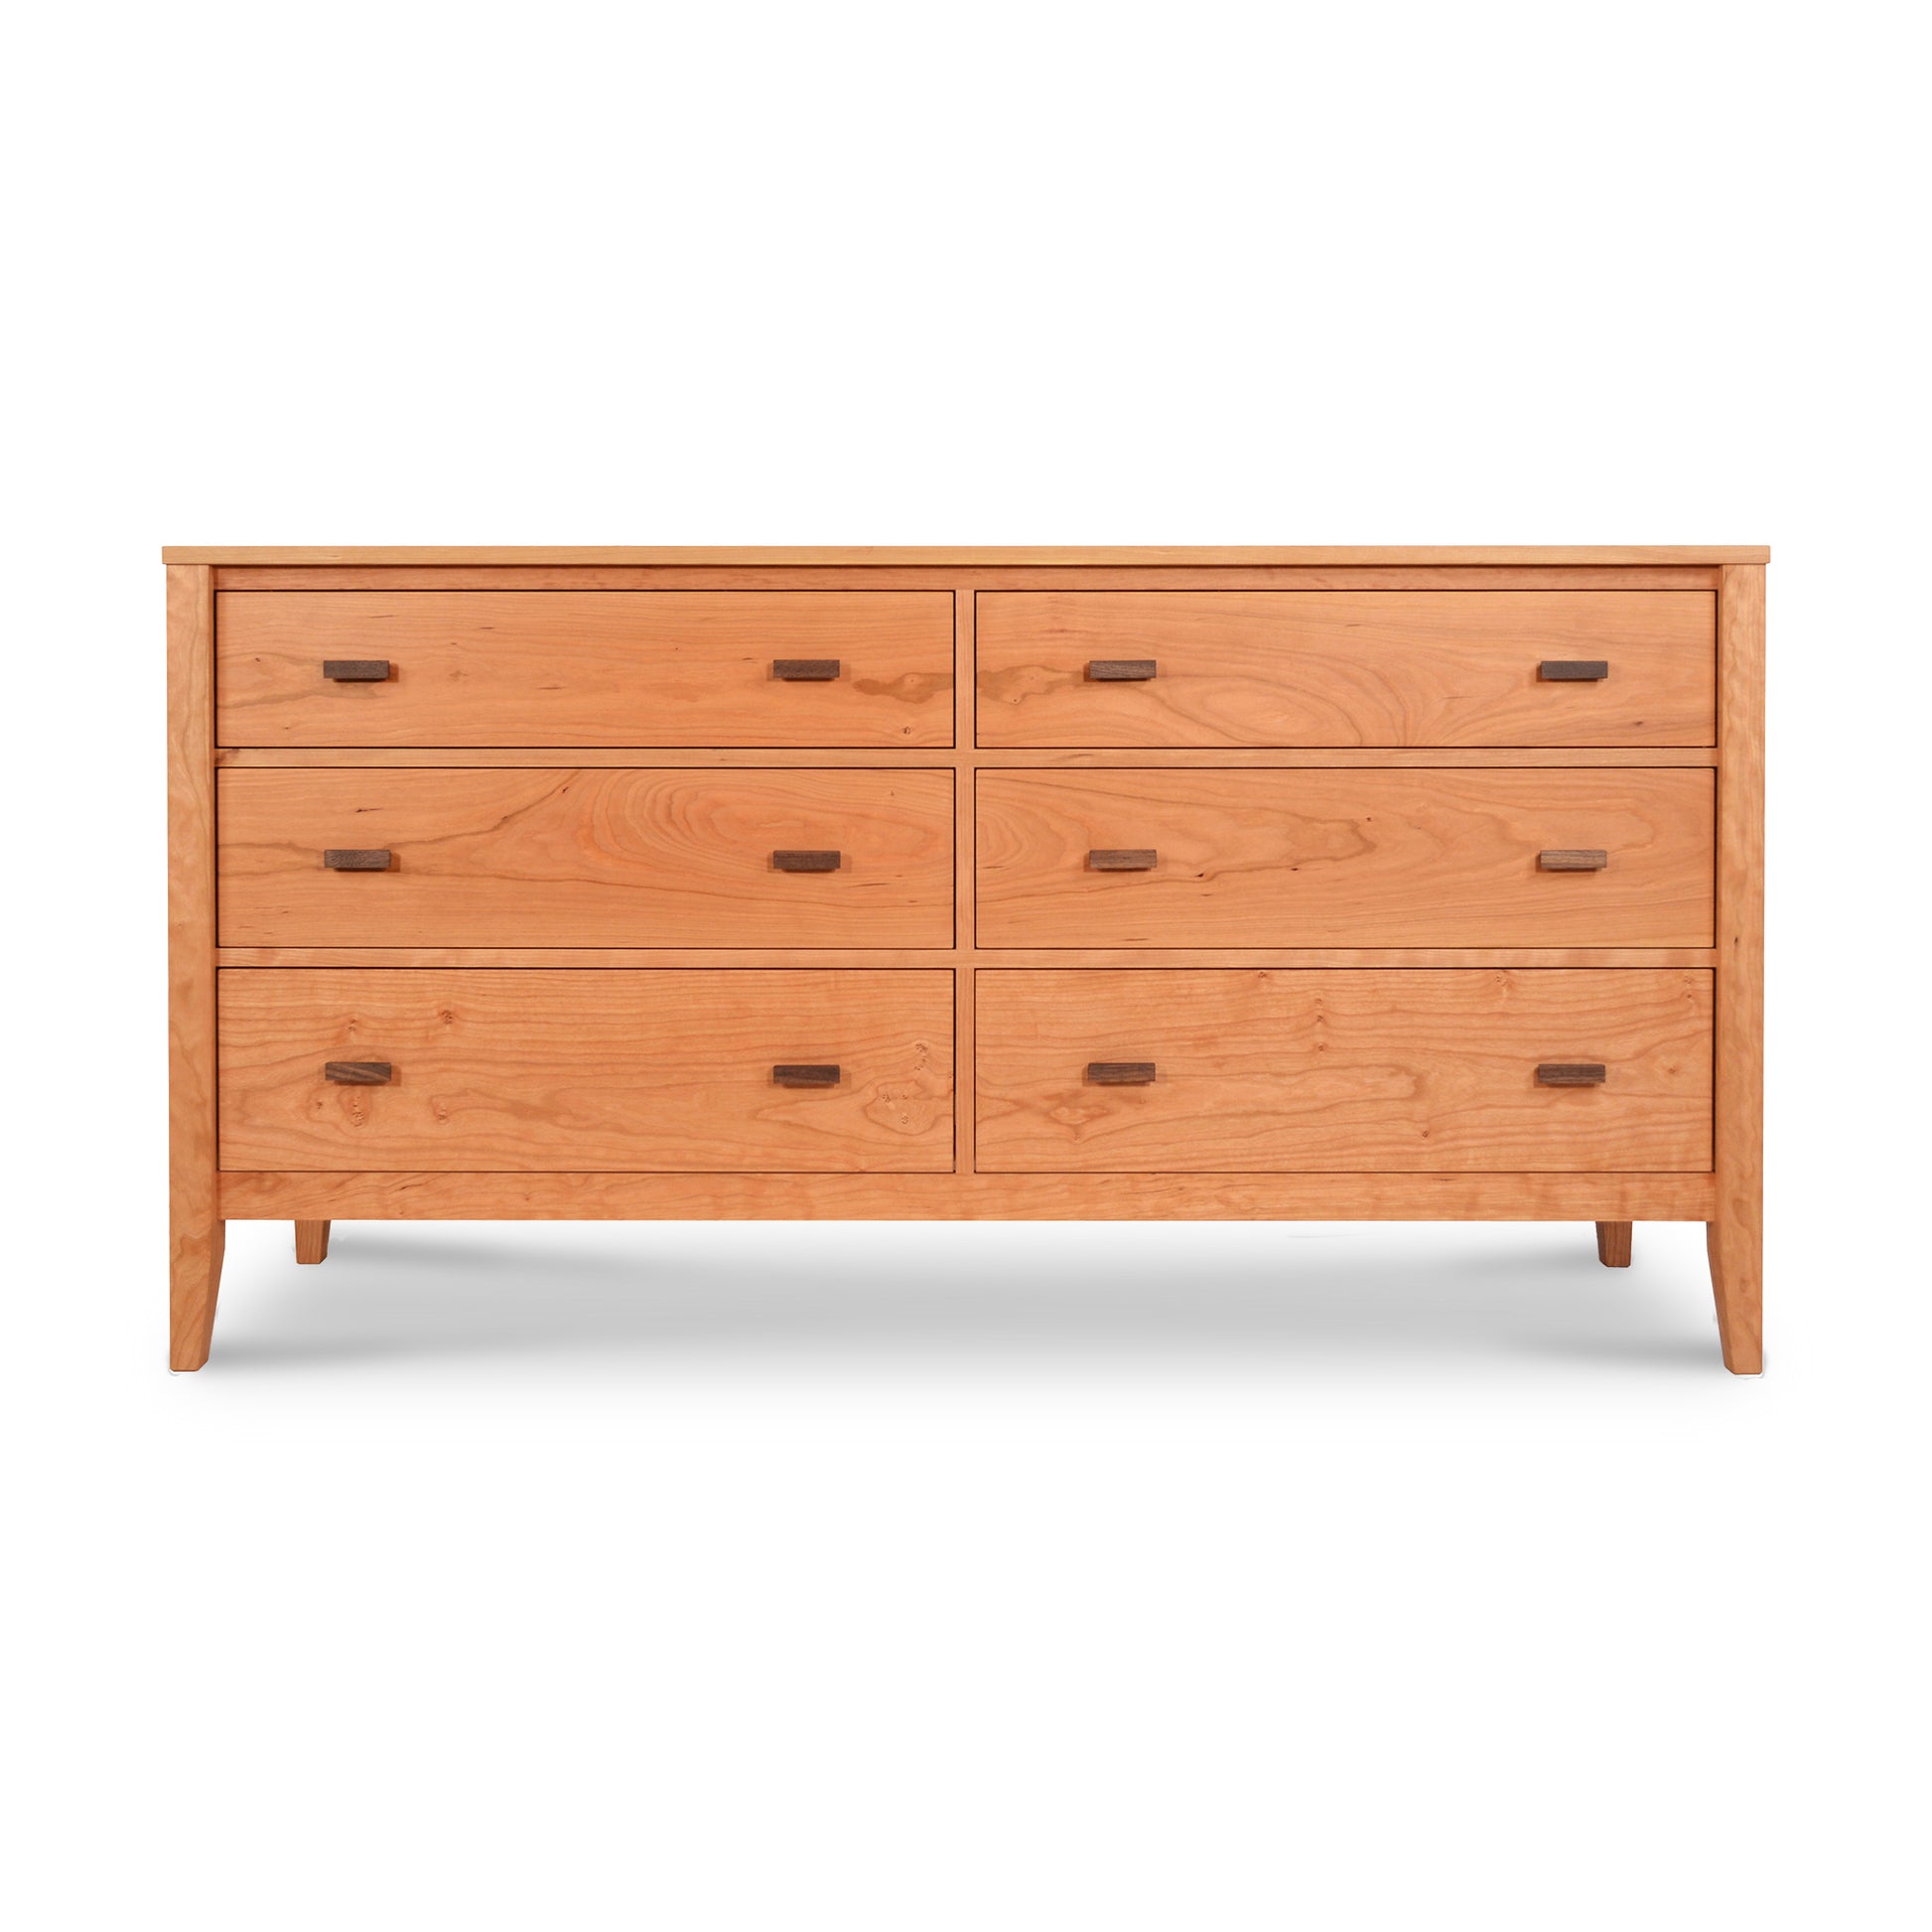 An image of a modern wooden Andover Modern 6-Drawer Dresser, featuring a sleek Maple Corner Woodworks design.